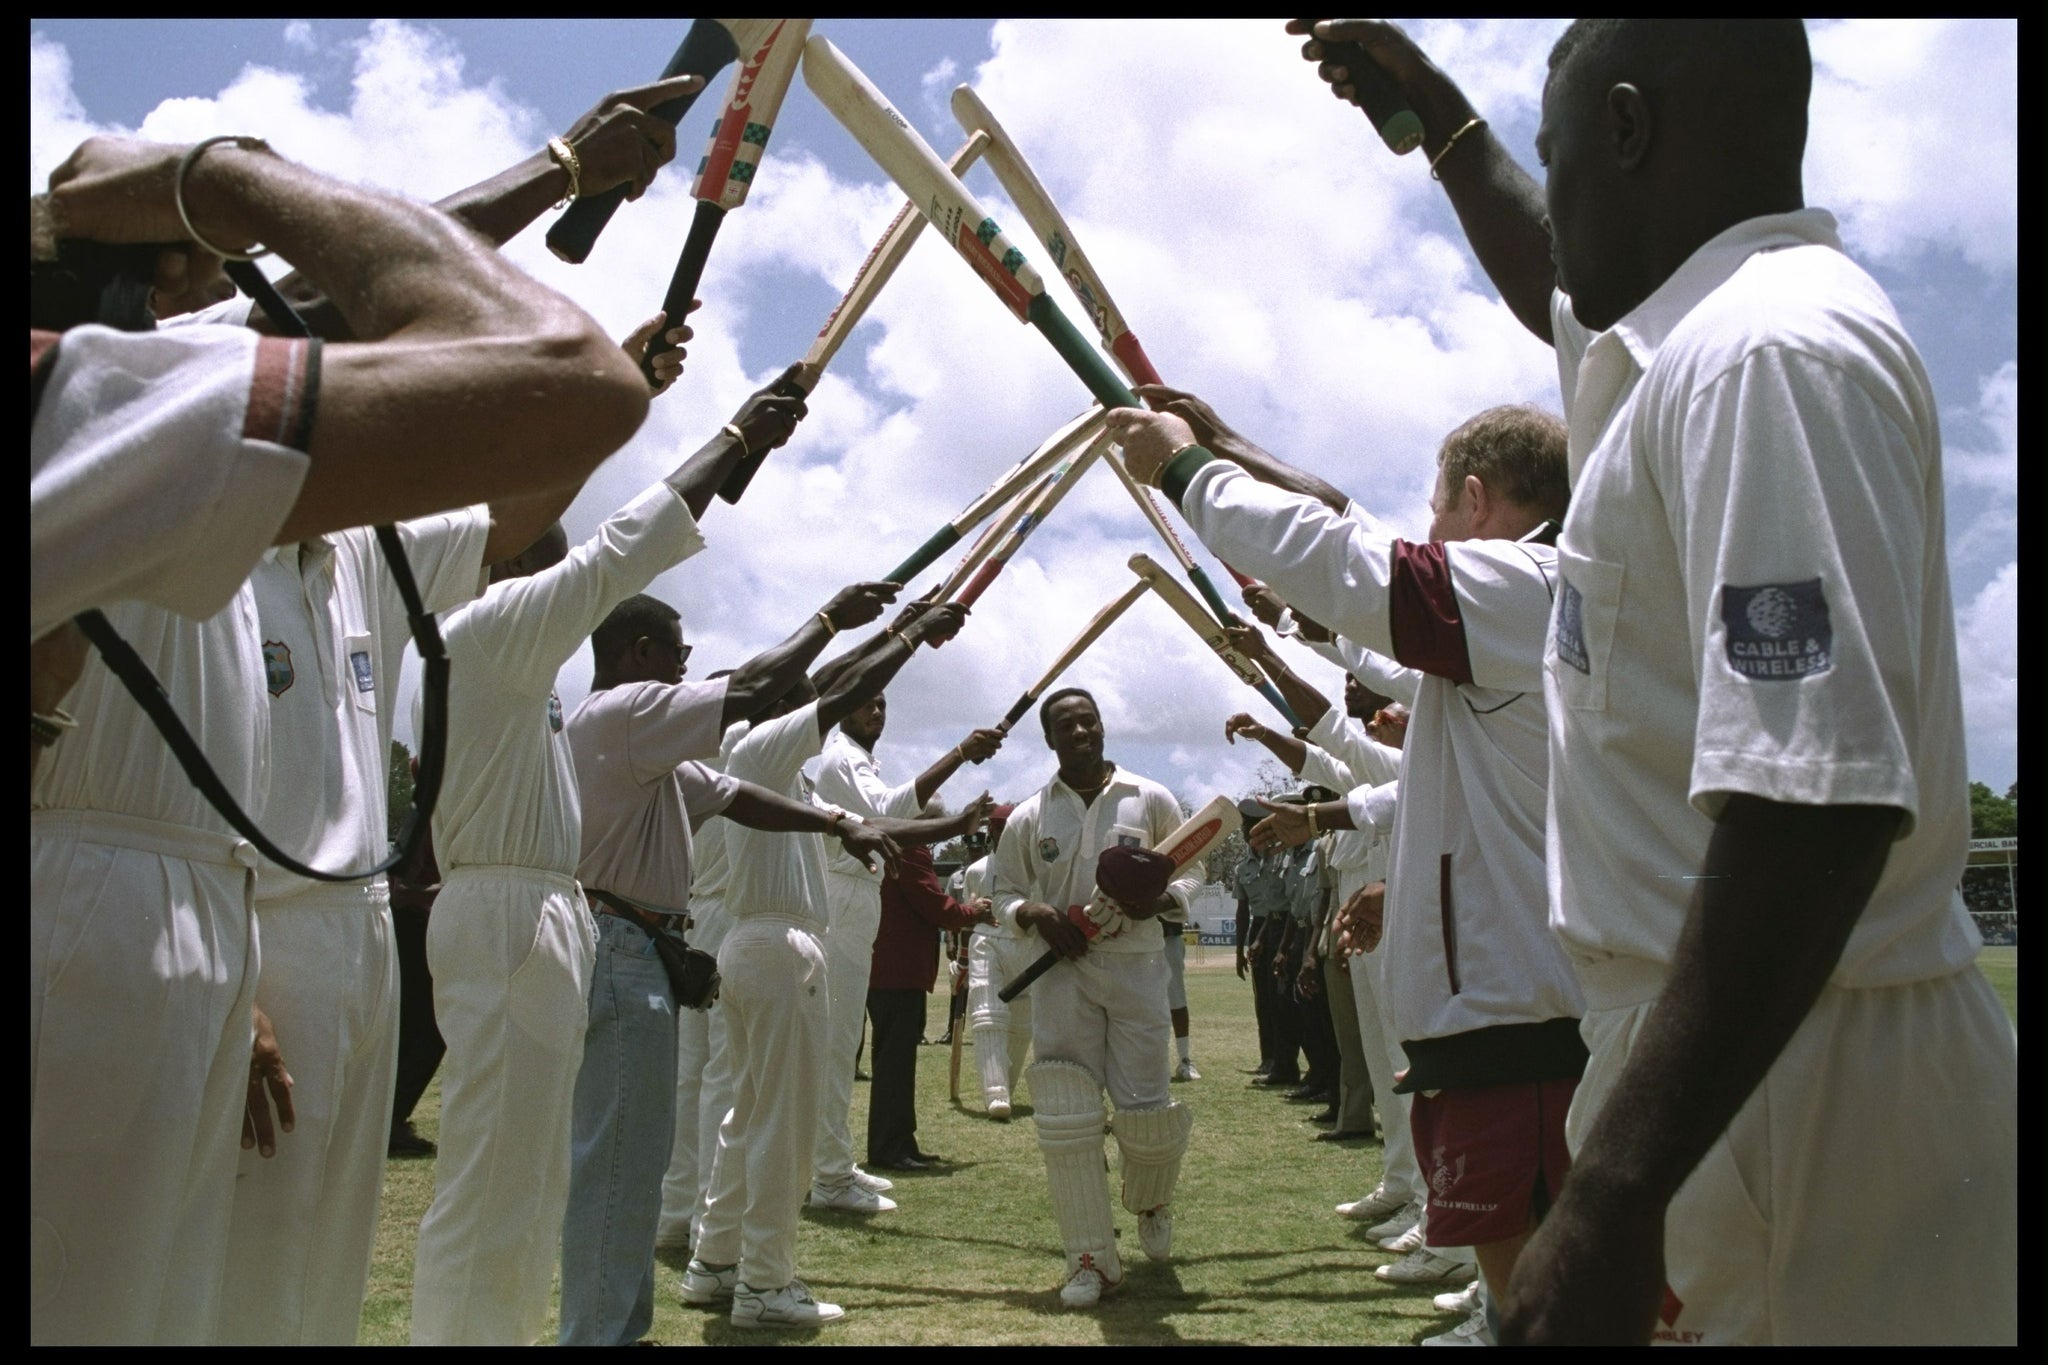 Brian Lara celebrates his world record Test score